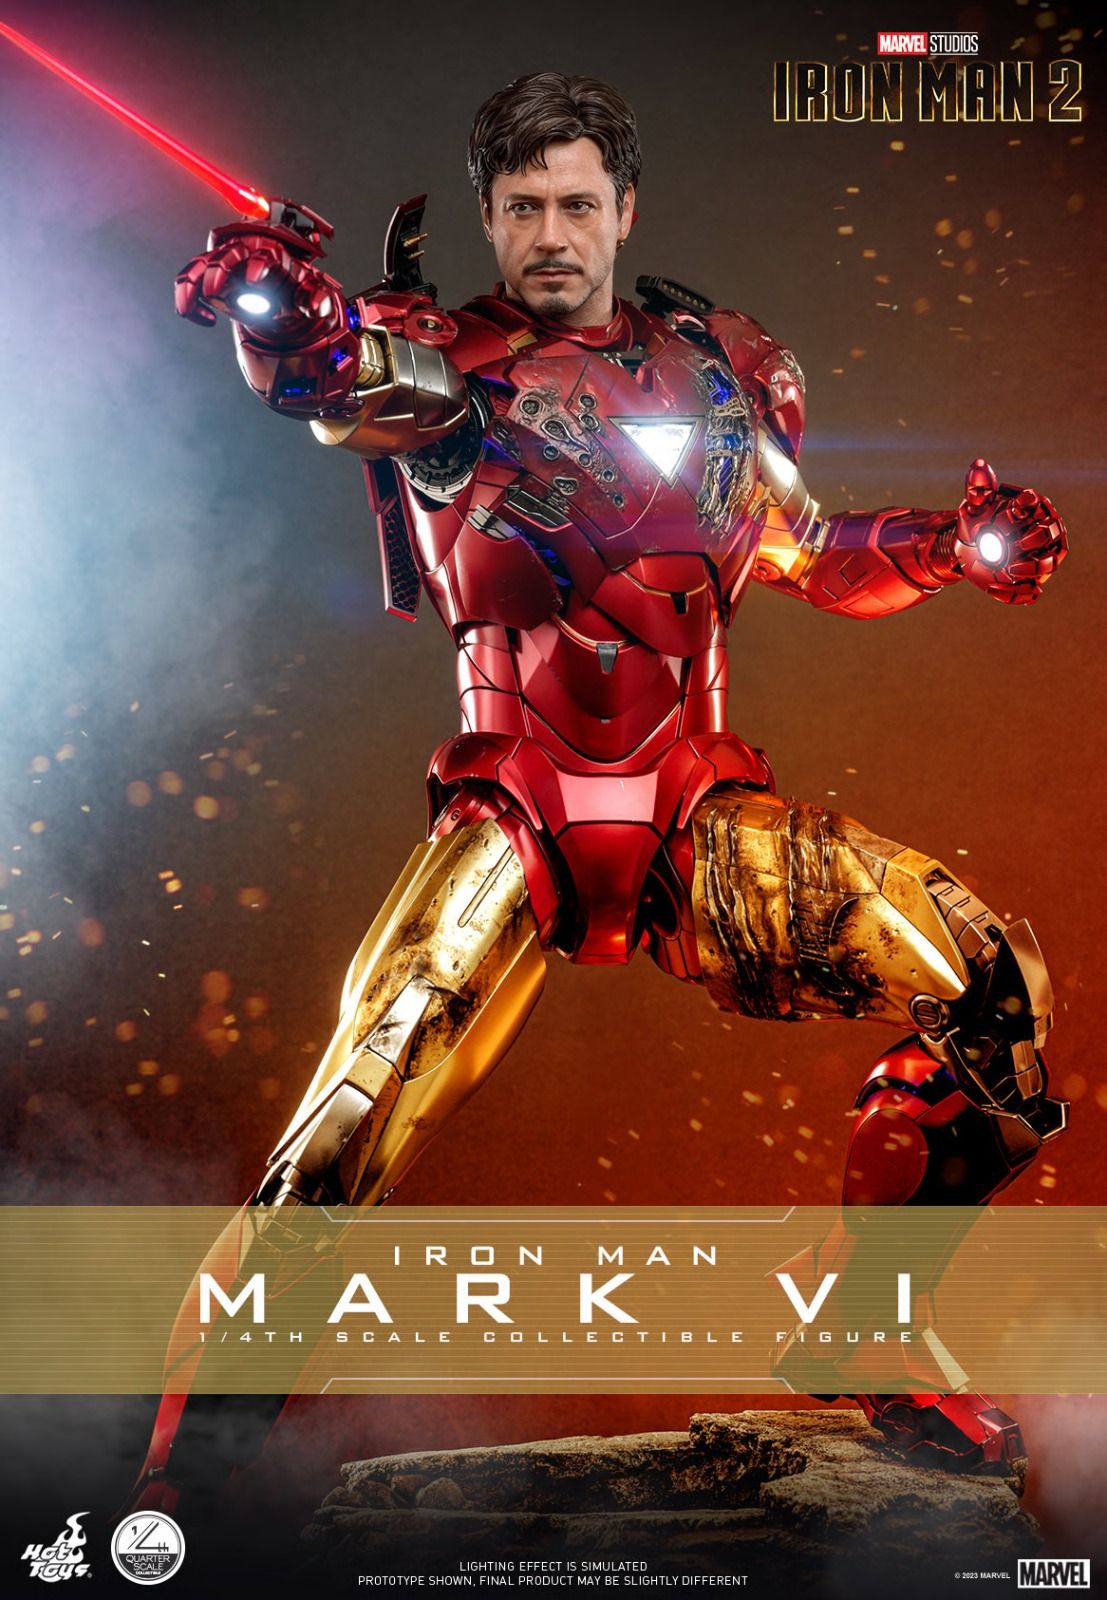 Robert Downey Jr. Won't Reprise Tony Stark Role, Says Marvel's Kevin Feige